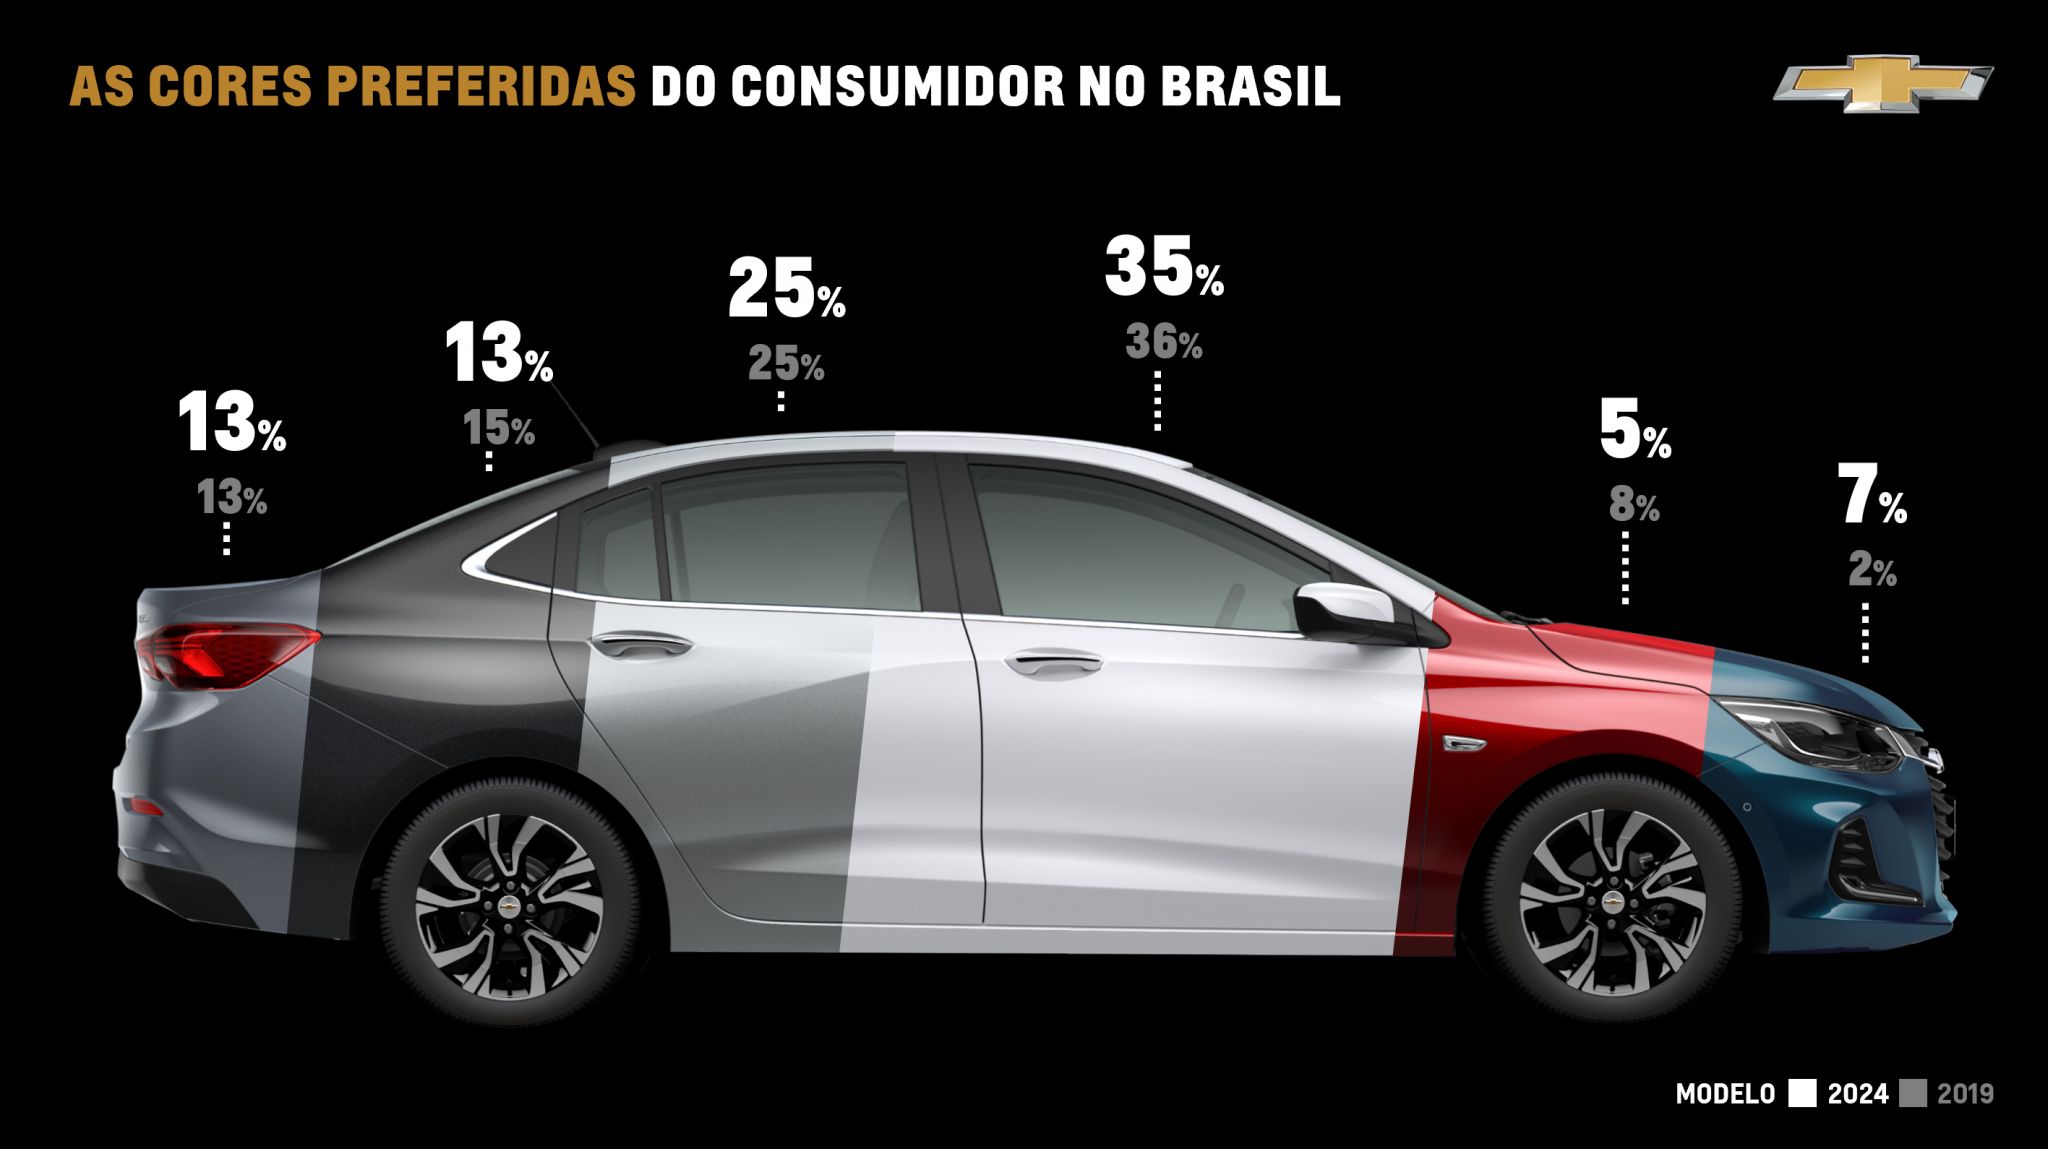 Ccores preferidas do consumidor no brasil